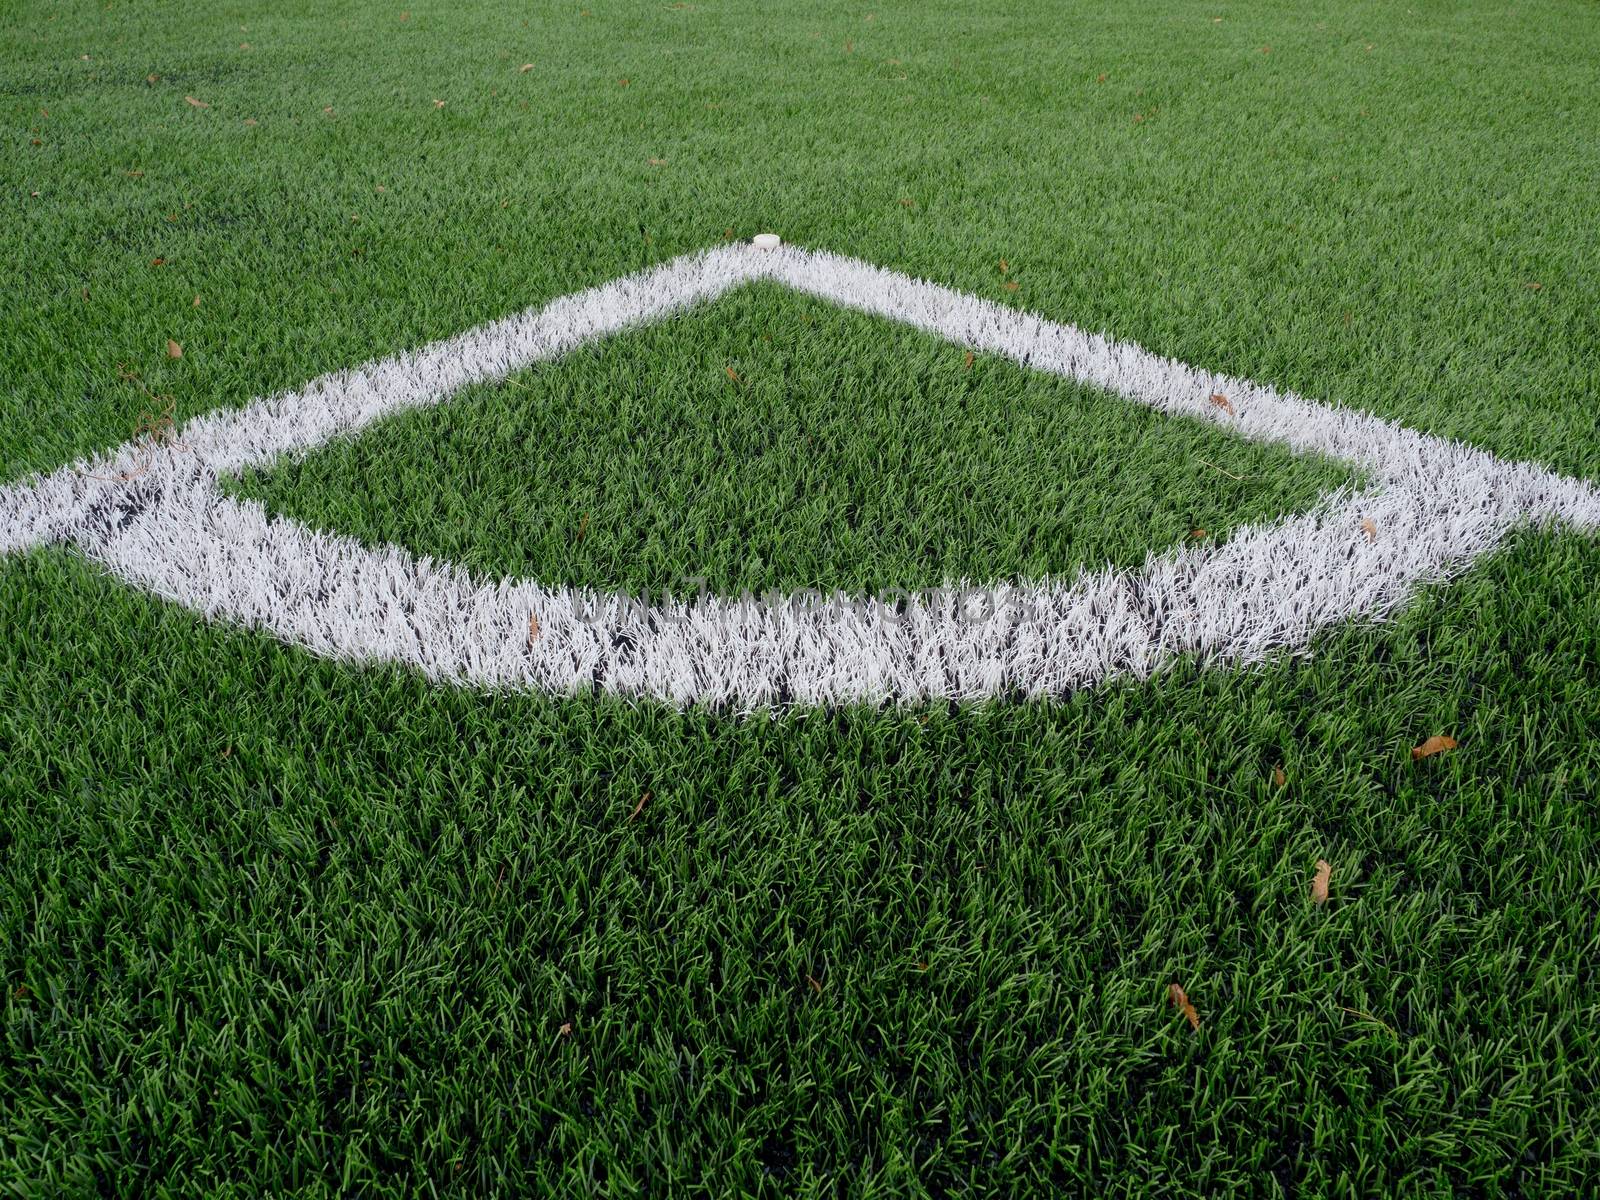 Football playground corner on heated artificial green turf playgroun by rdonar2